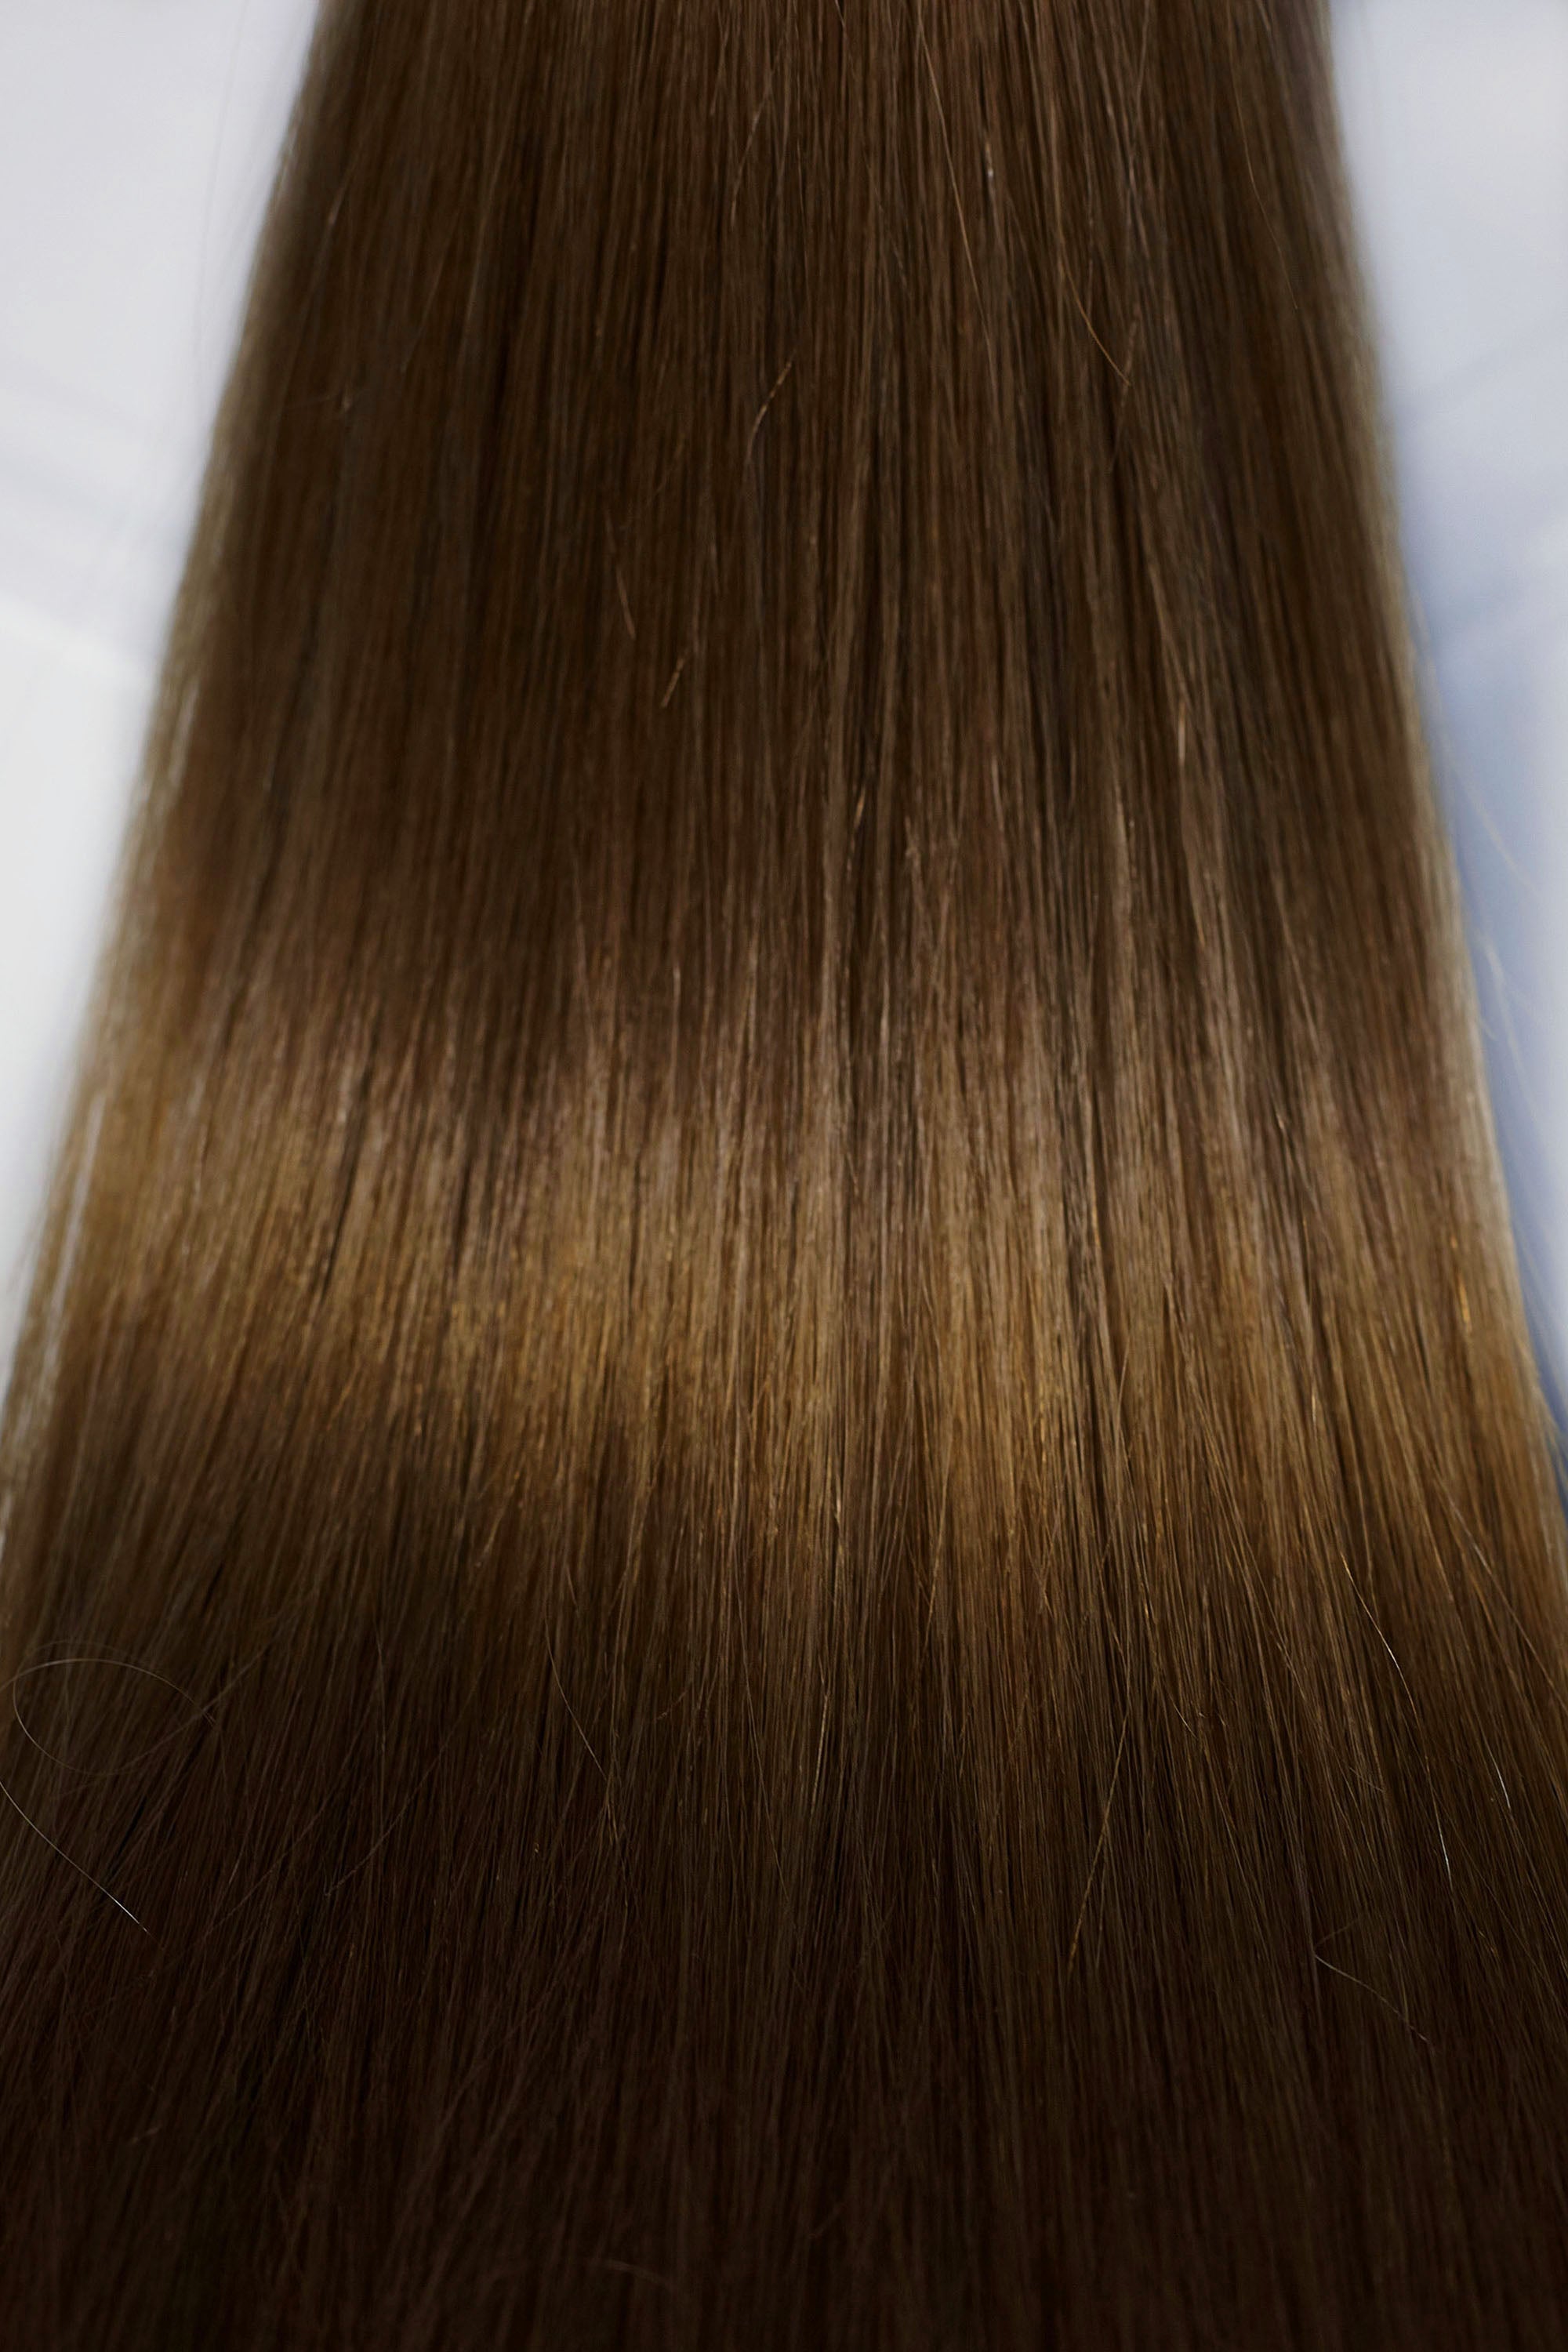 Behair professional Keratin Tip "Premium" 28" (70cm) Natural Straight Honey Walnut Brown #5 - 25g (Micro - 0.5g each pcs) hair extensions